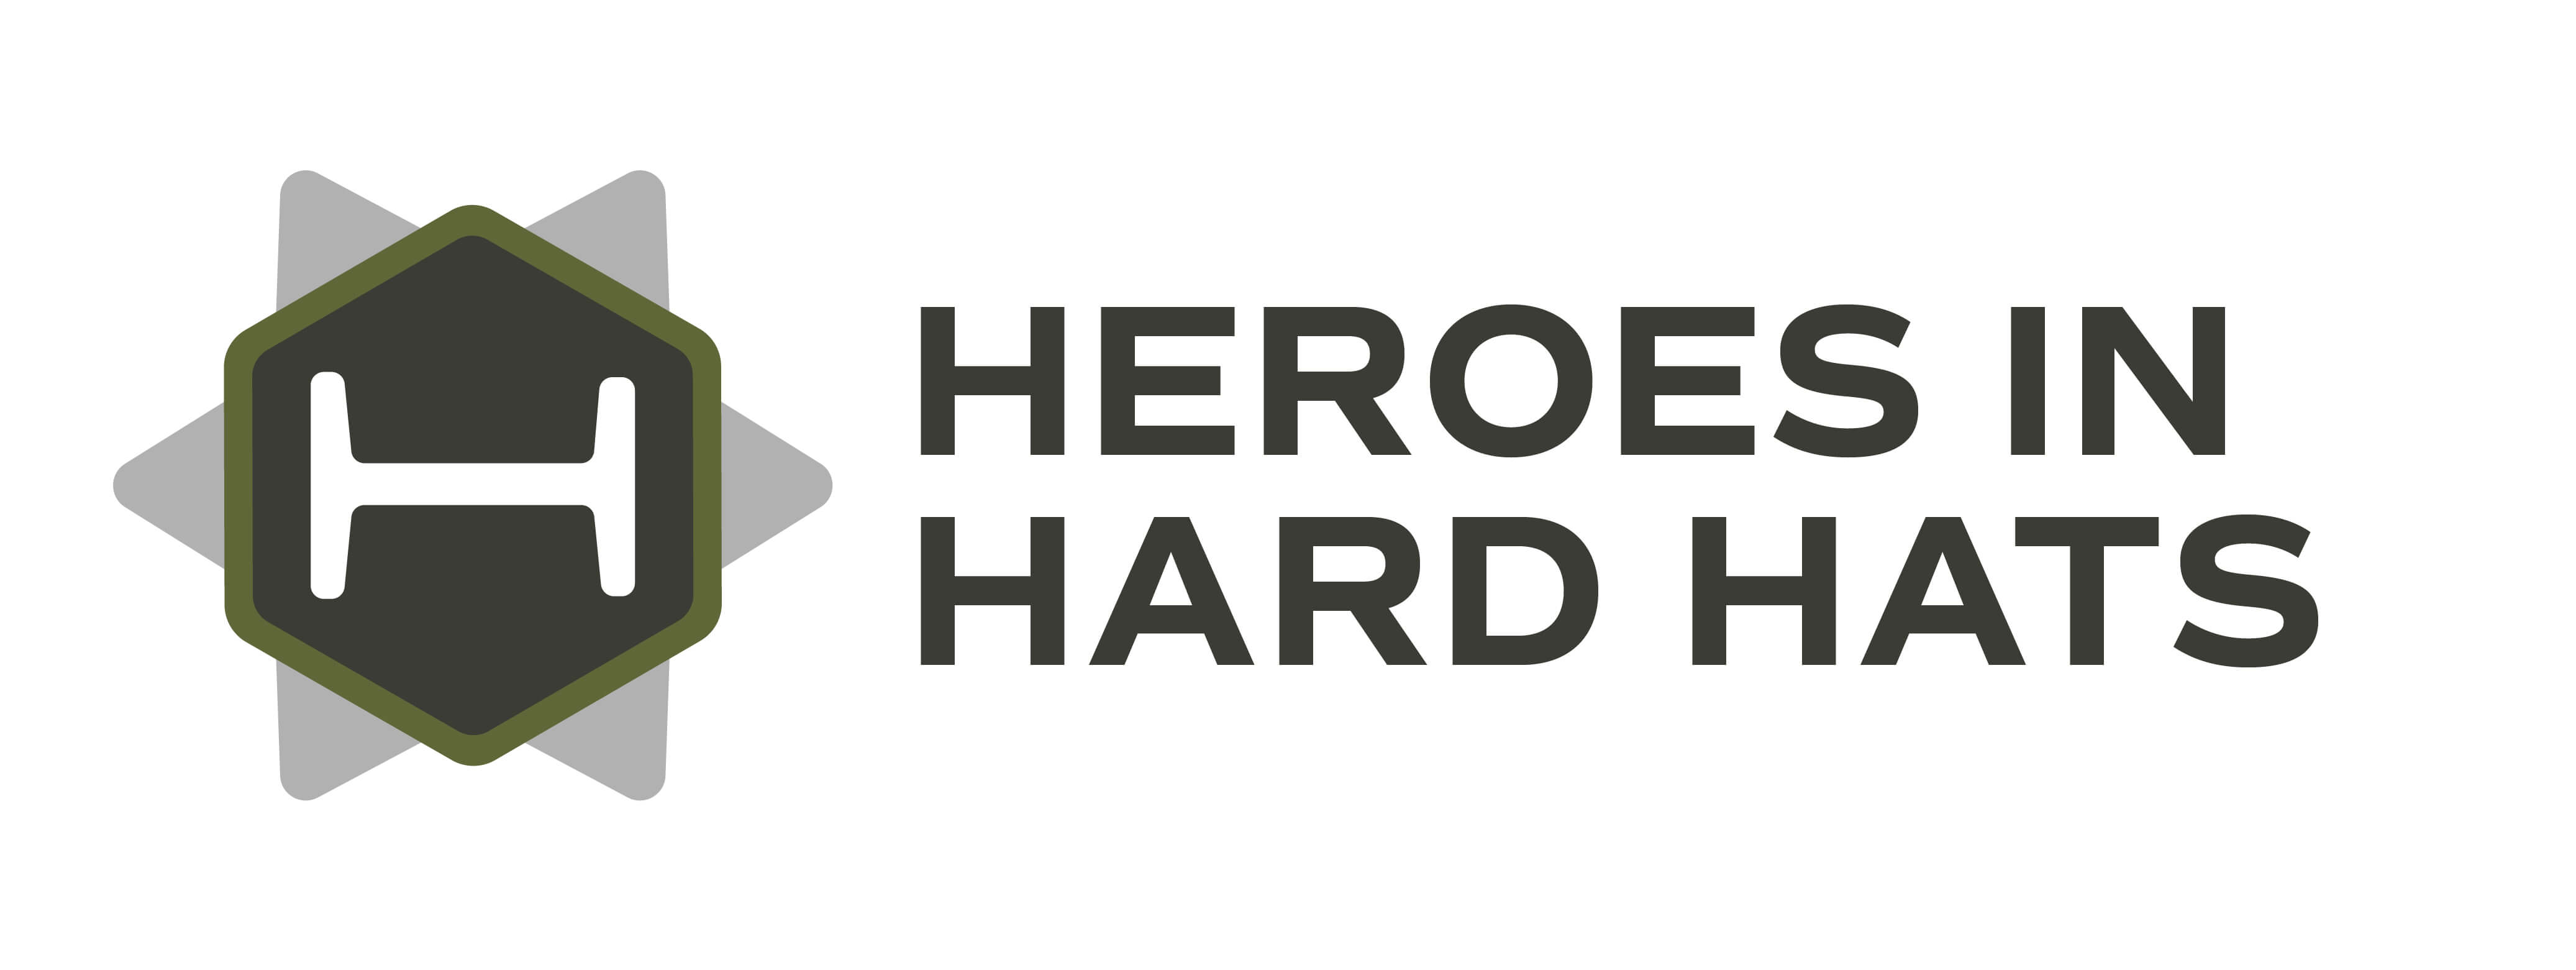 Hats Logo - Heroes in Hard Hats logo